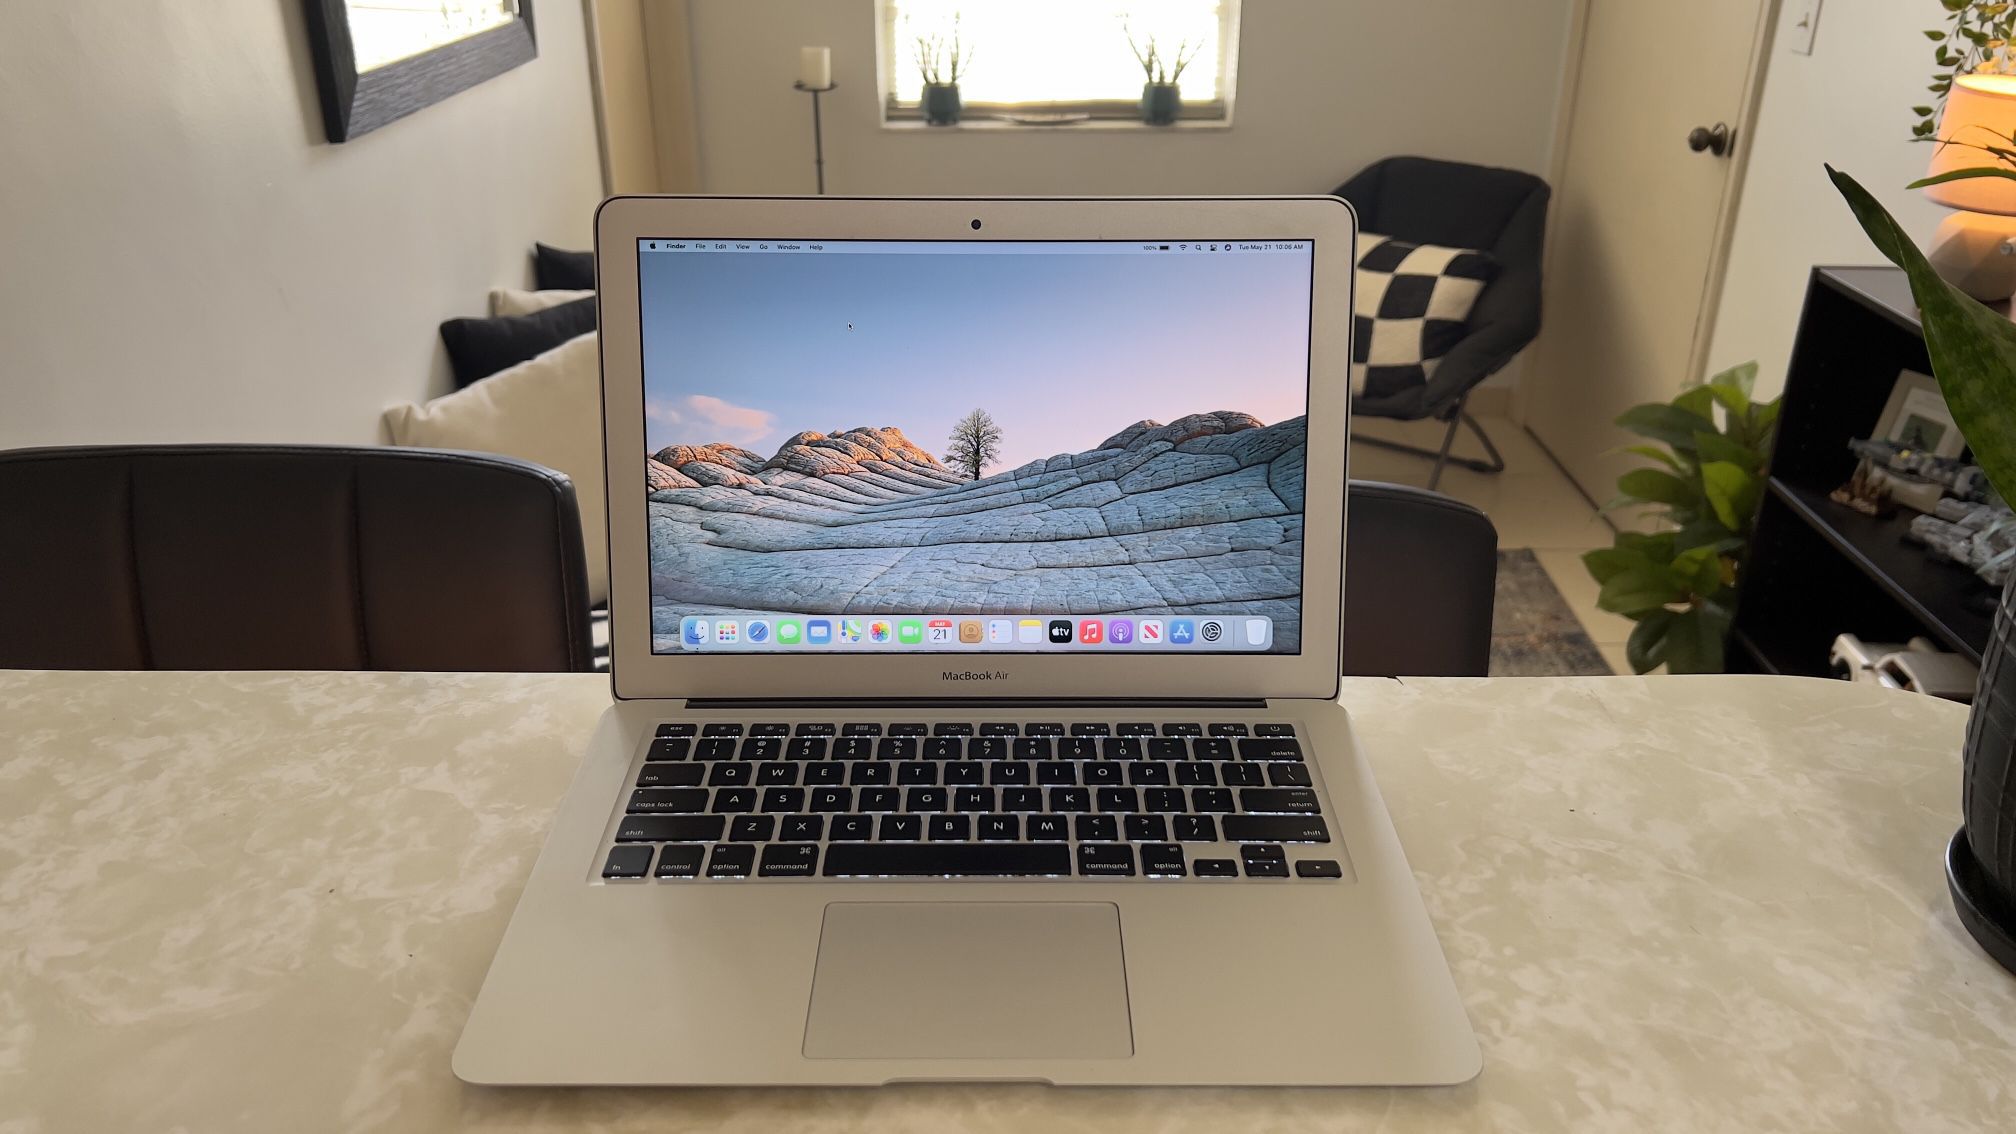 MacBook Air 2014 13inch Apple Laptop